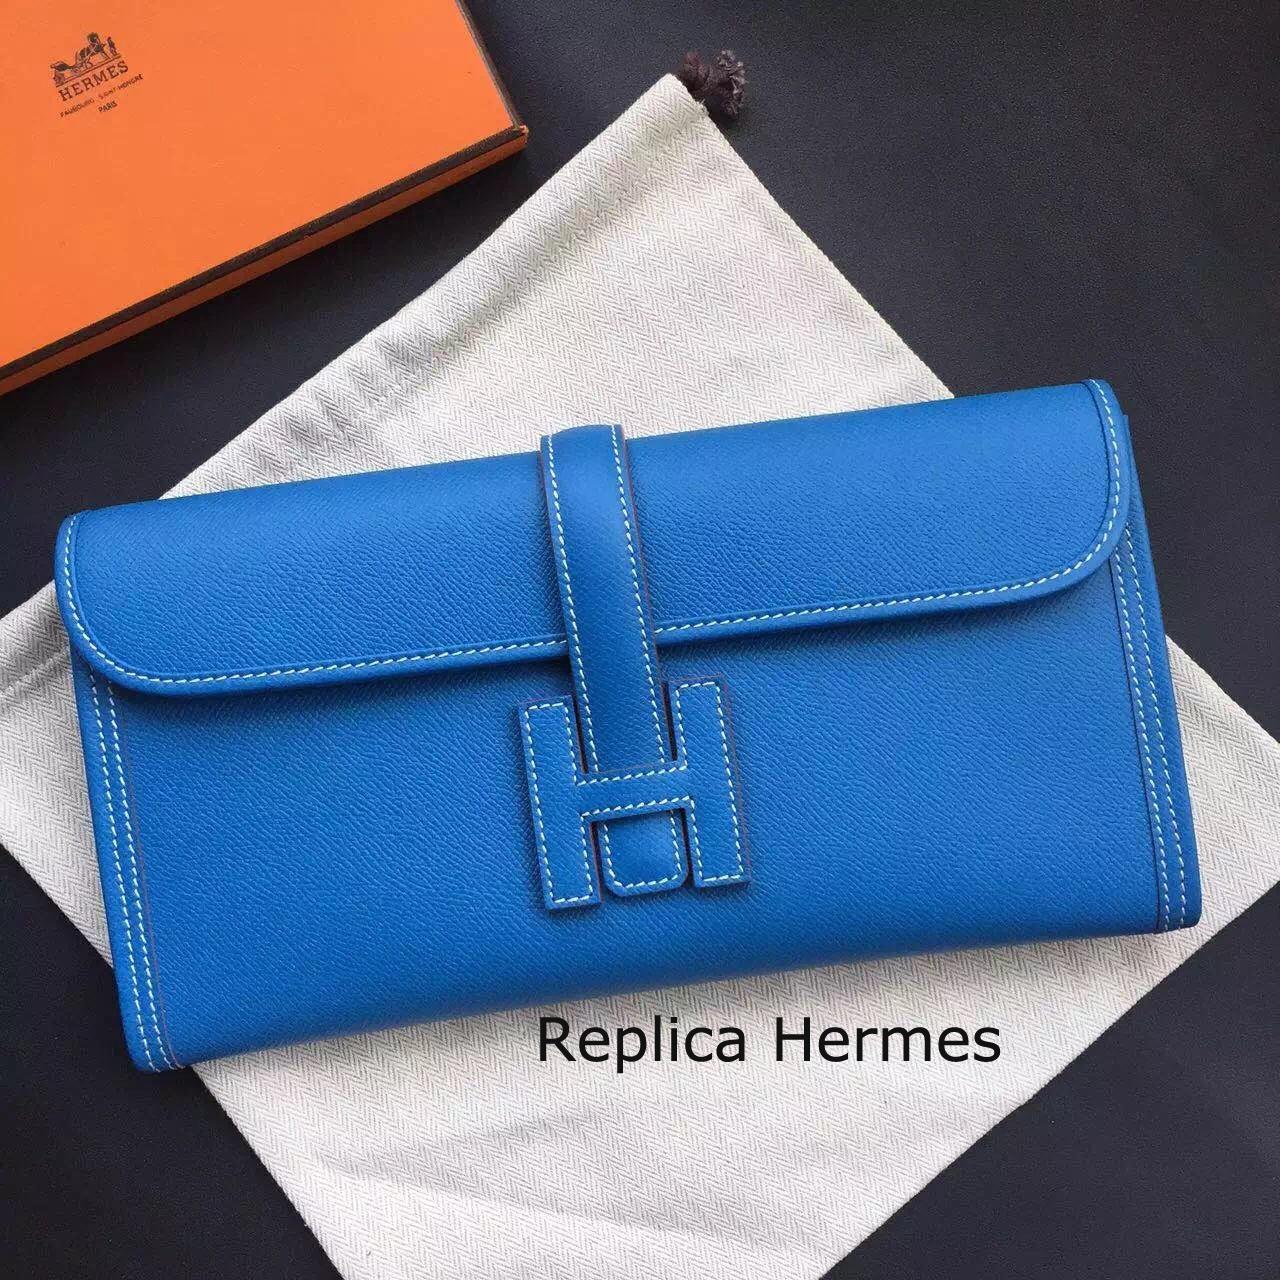 Replica High Quality Hermes Jige Elan 29 Clutch Bag In Blue Epsom Leather